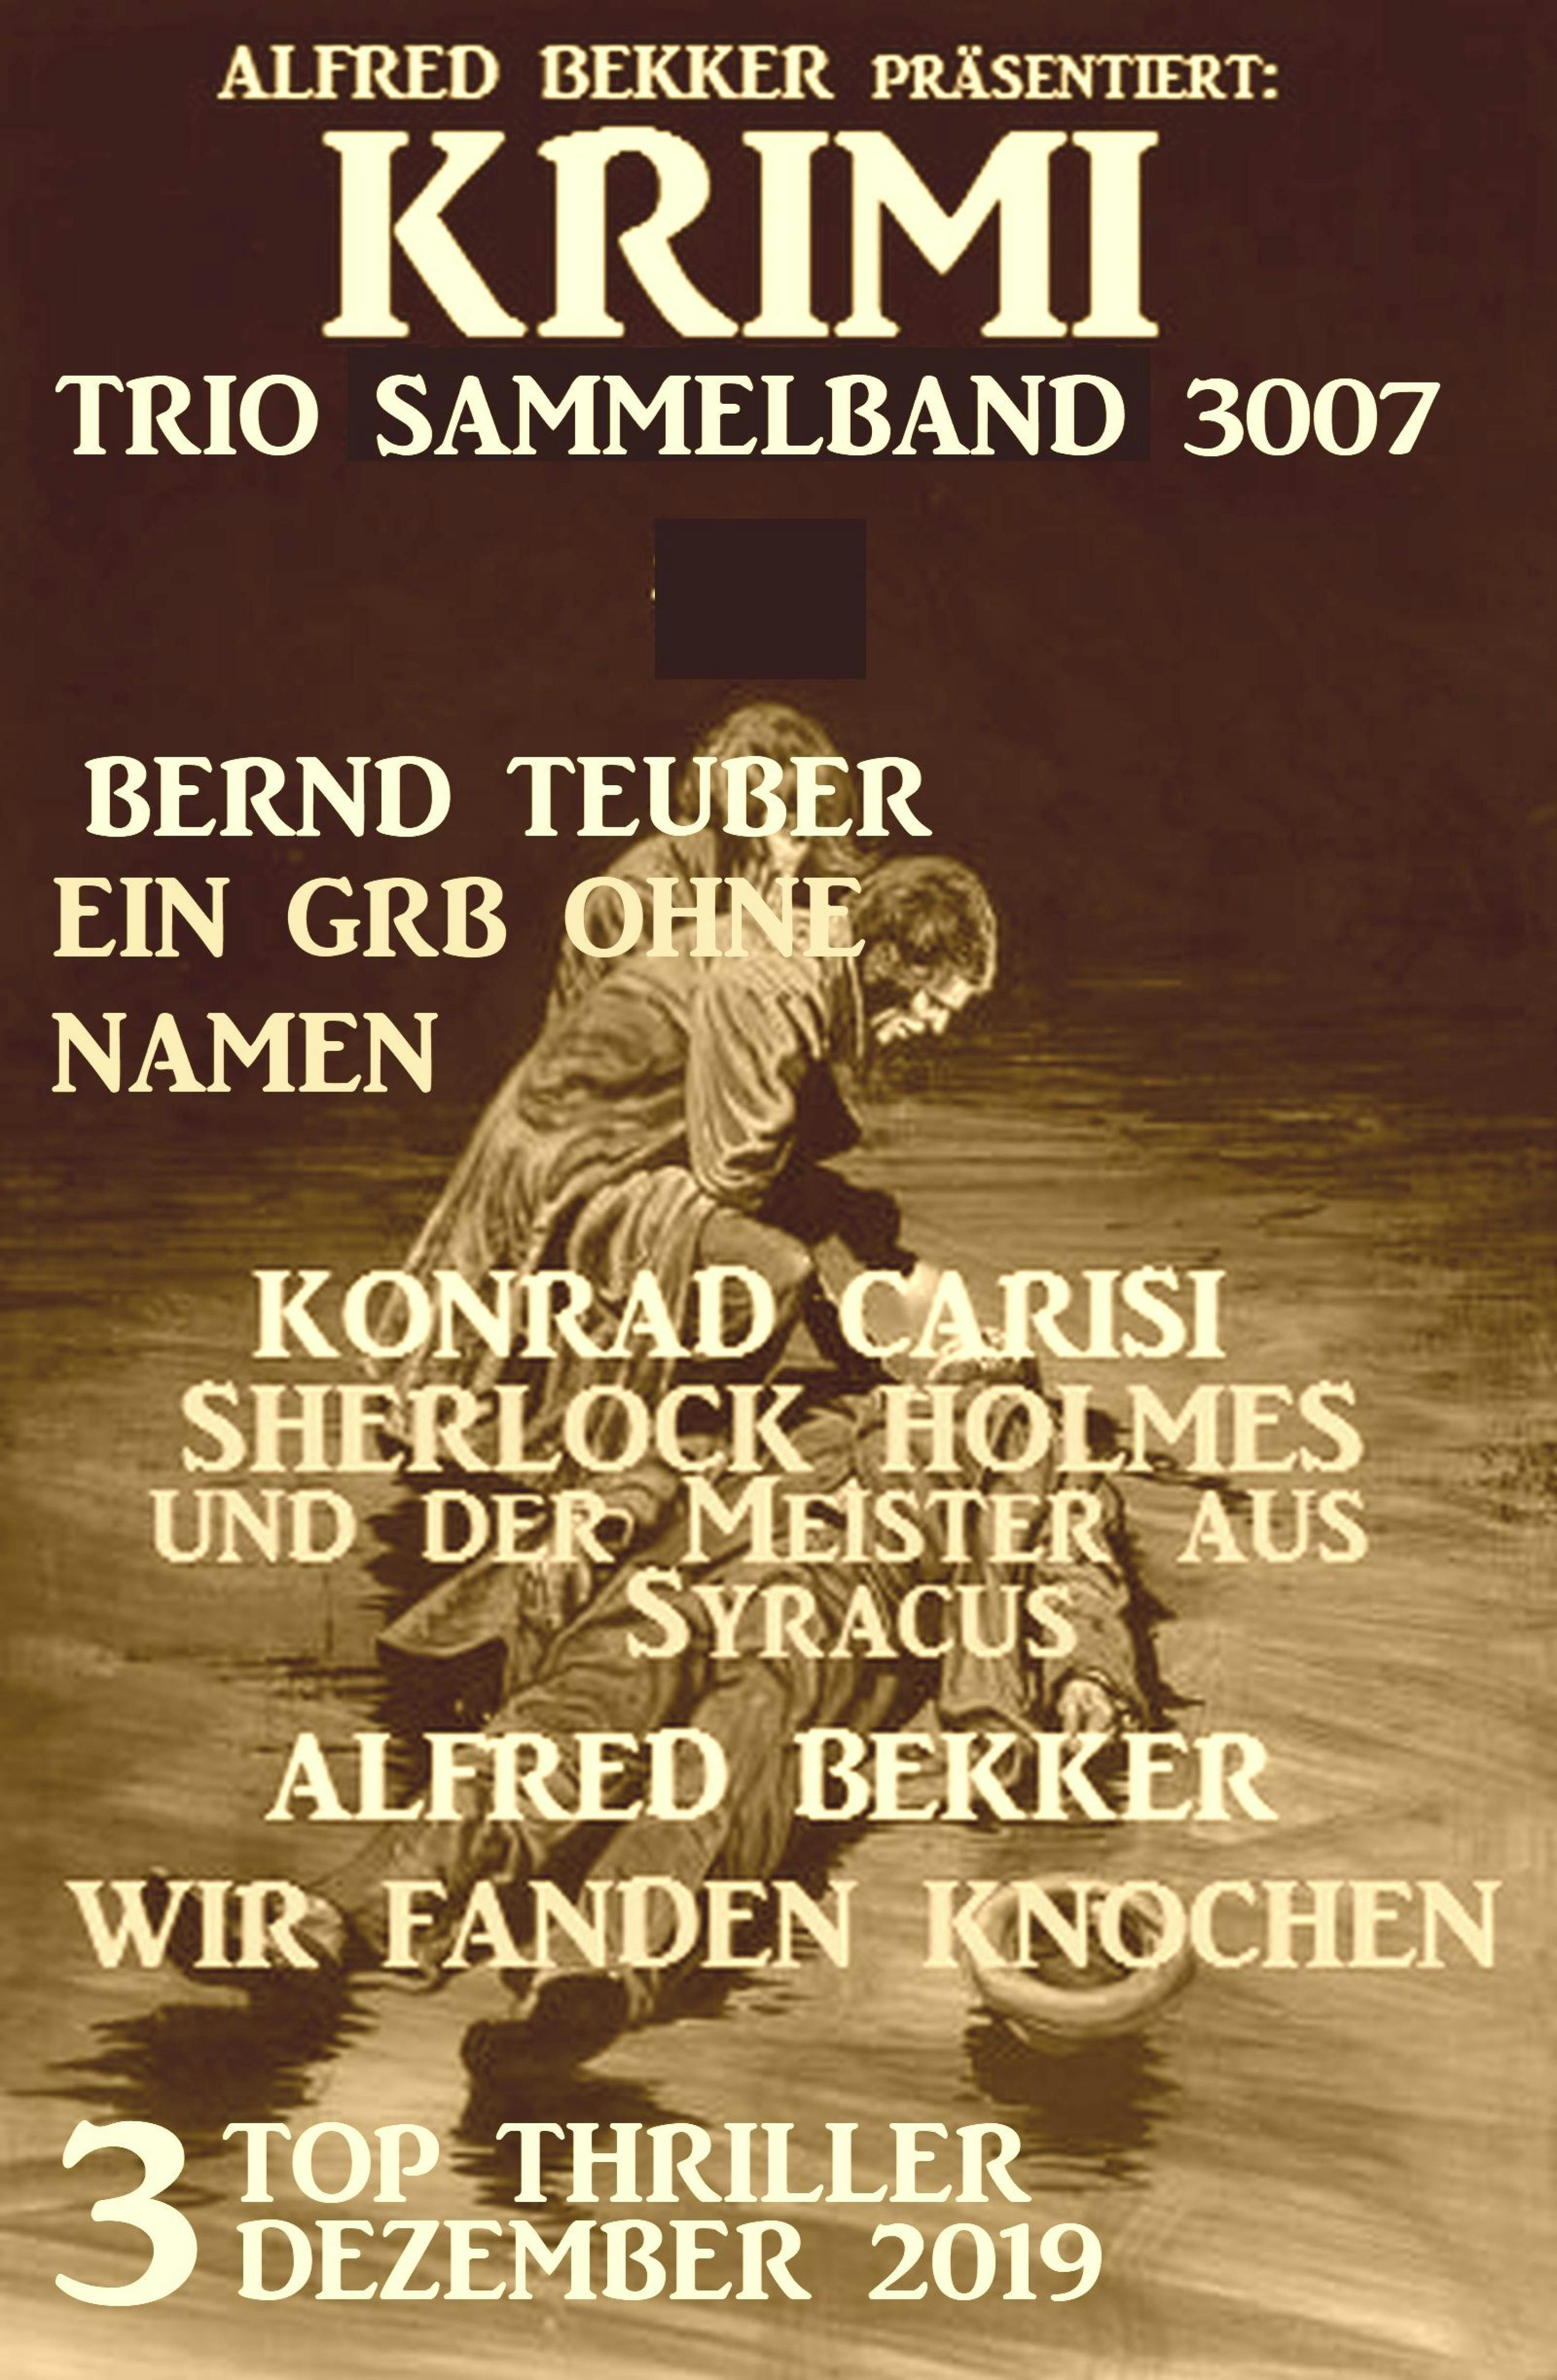 Krimi Trio Sammelband 3007 - Dezember 2019 - Alfred Bekker, Bernd Teuber, Konrad Carisi